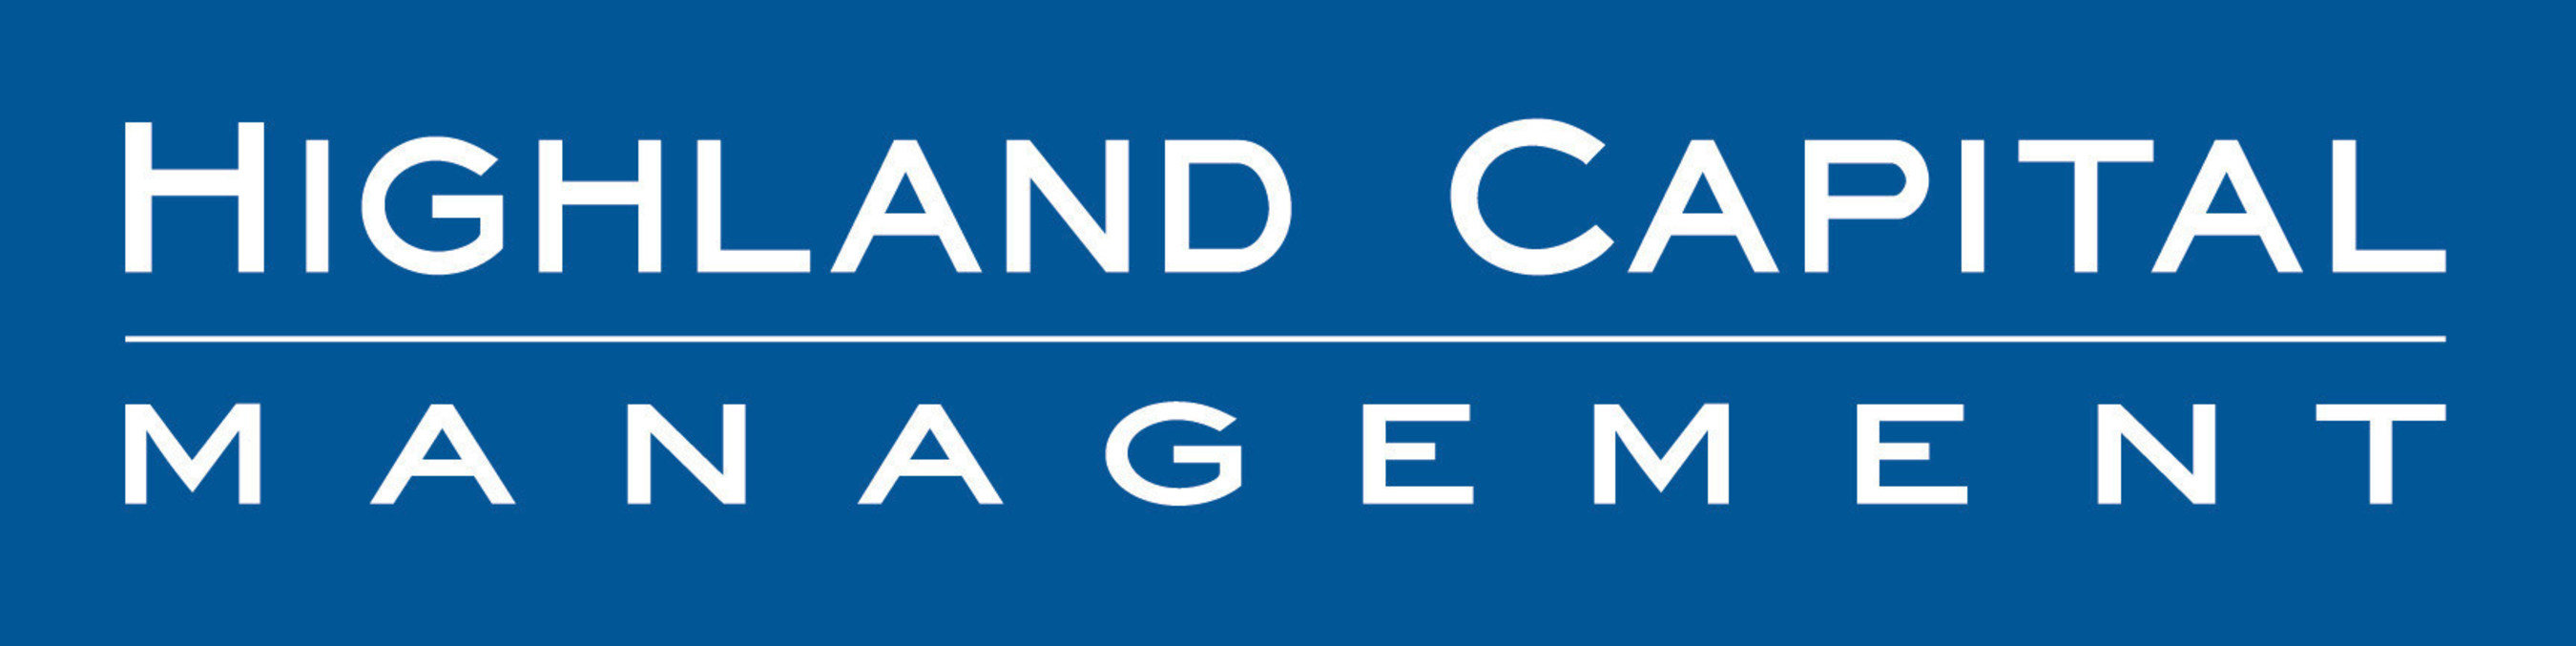 Highland Capital Management logo (PRNewsFoto/Highland Capital Management)